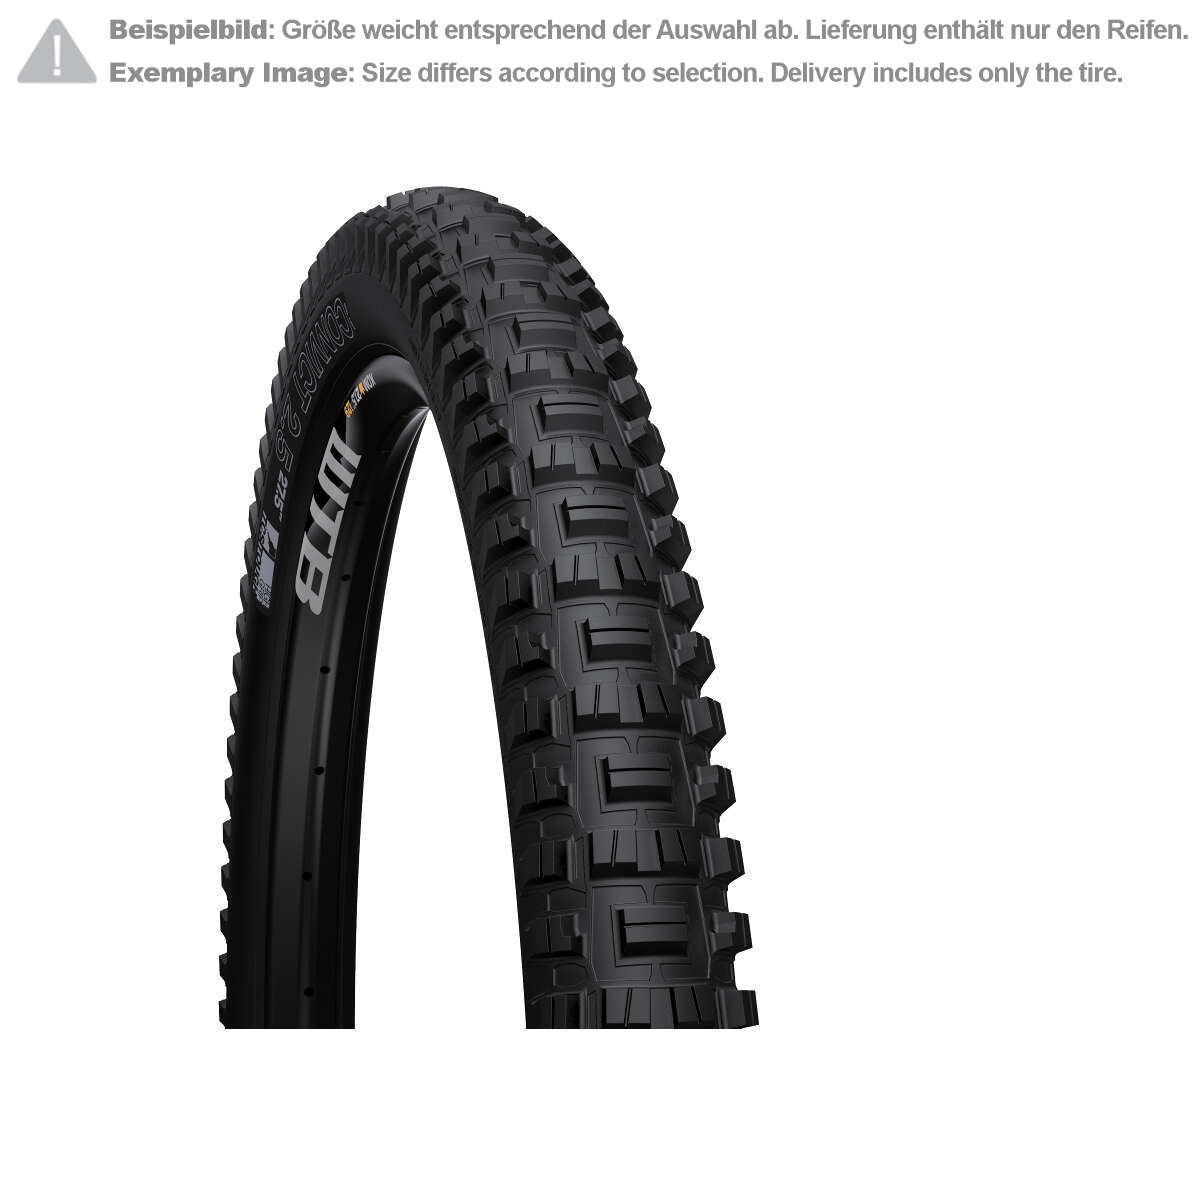 WTB MTB Tires Convict Black, 27.5 x 2.5 Inch, Tough, High Grip, Tubeless Ready